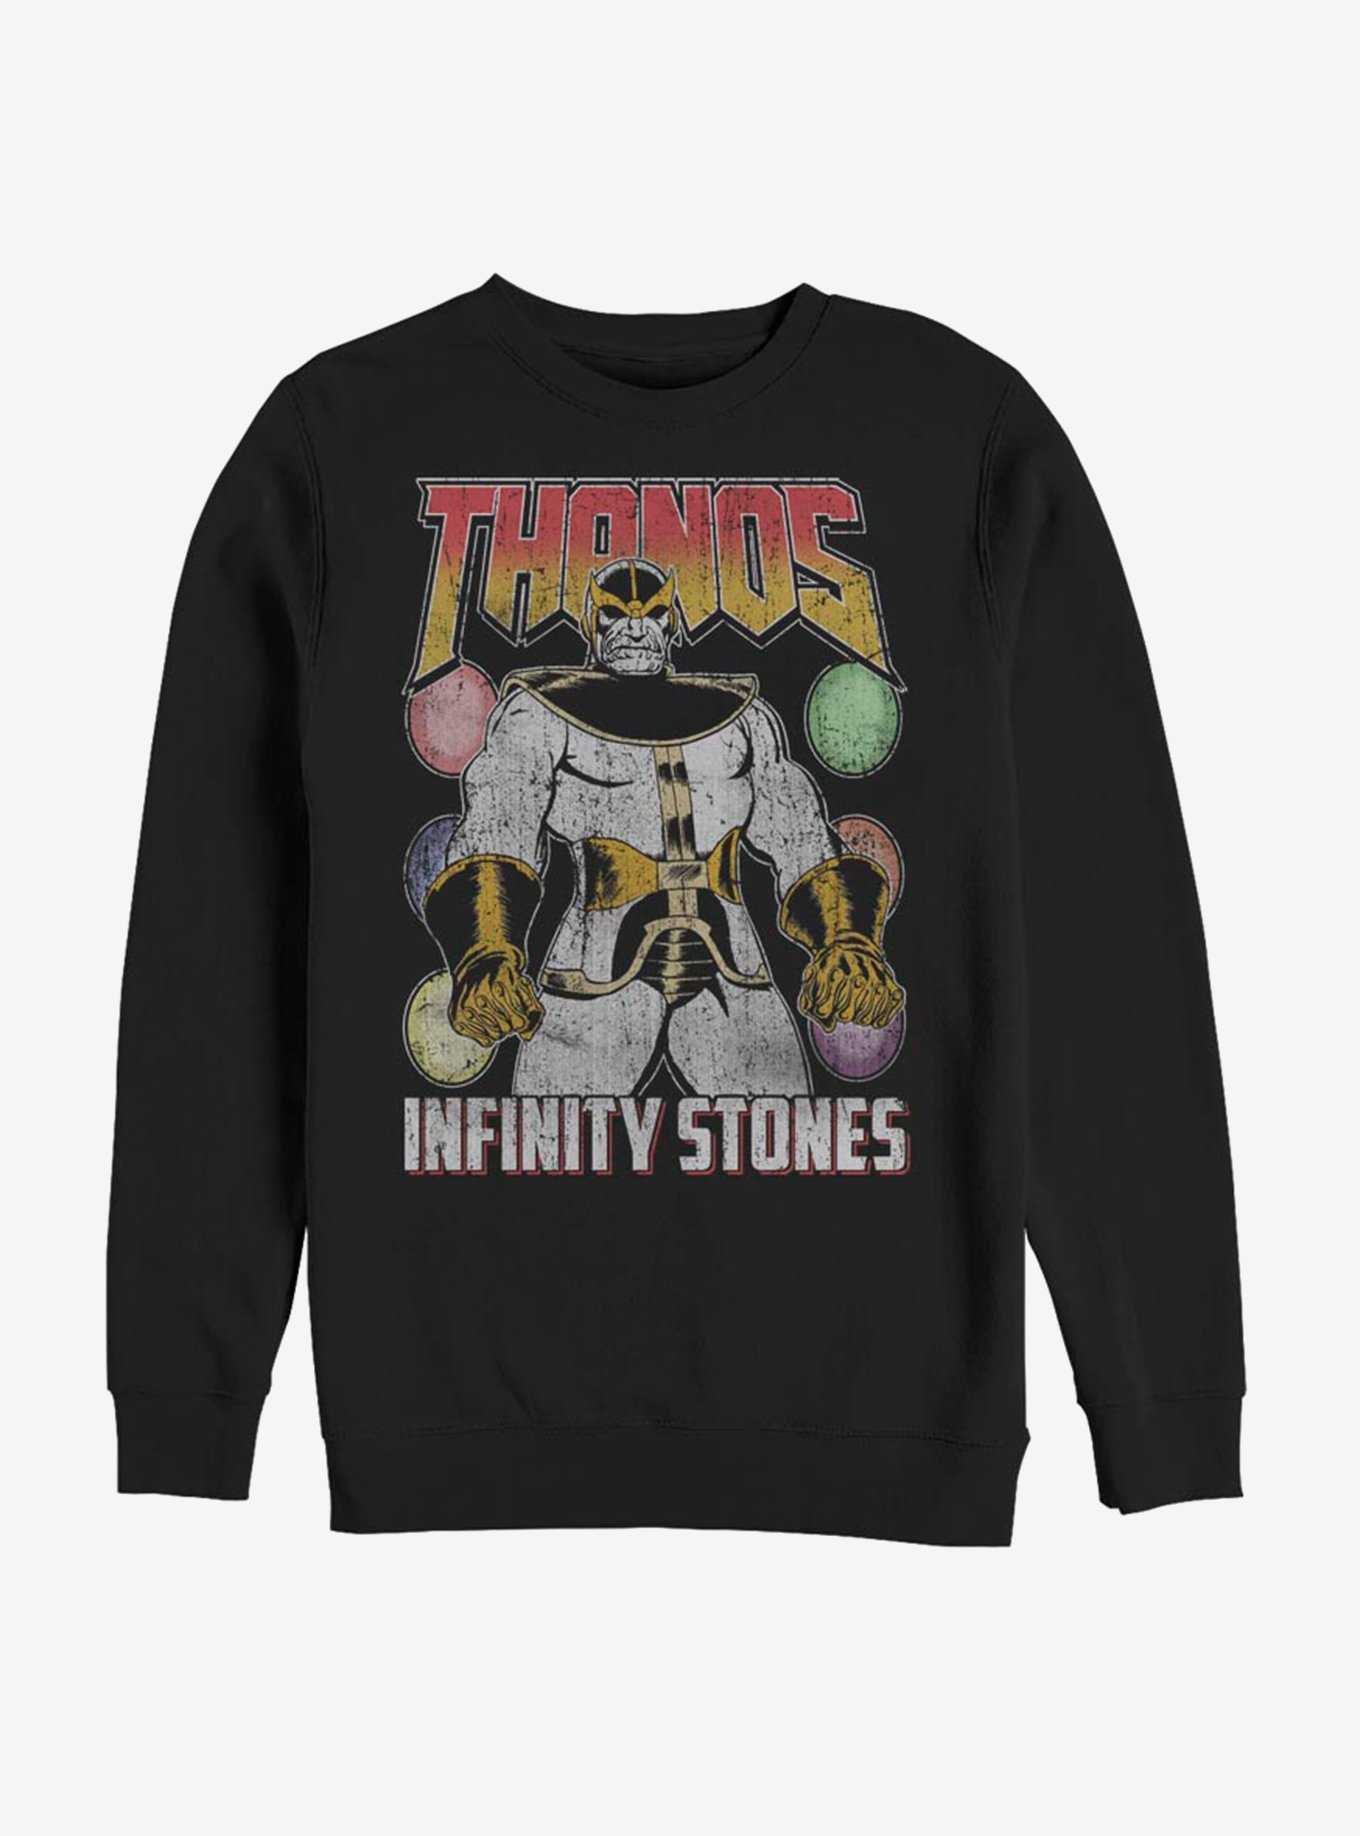 Avengers Thanos And The Infinity Stones Sweatshirt, , hi-res